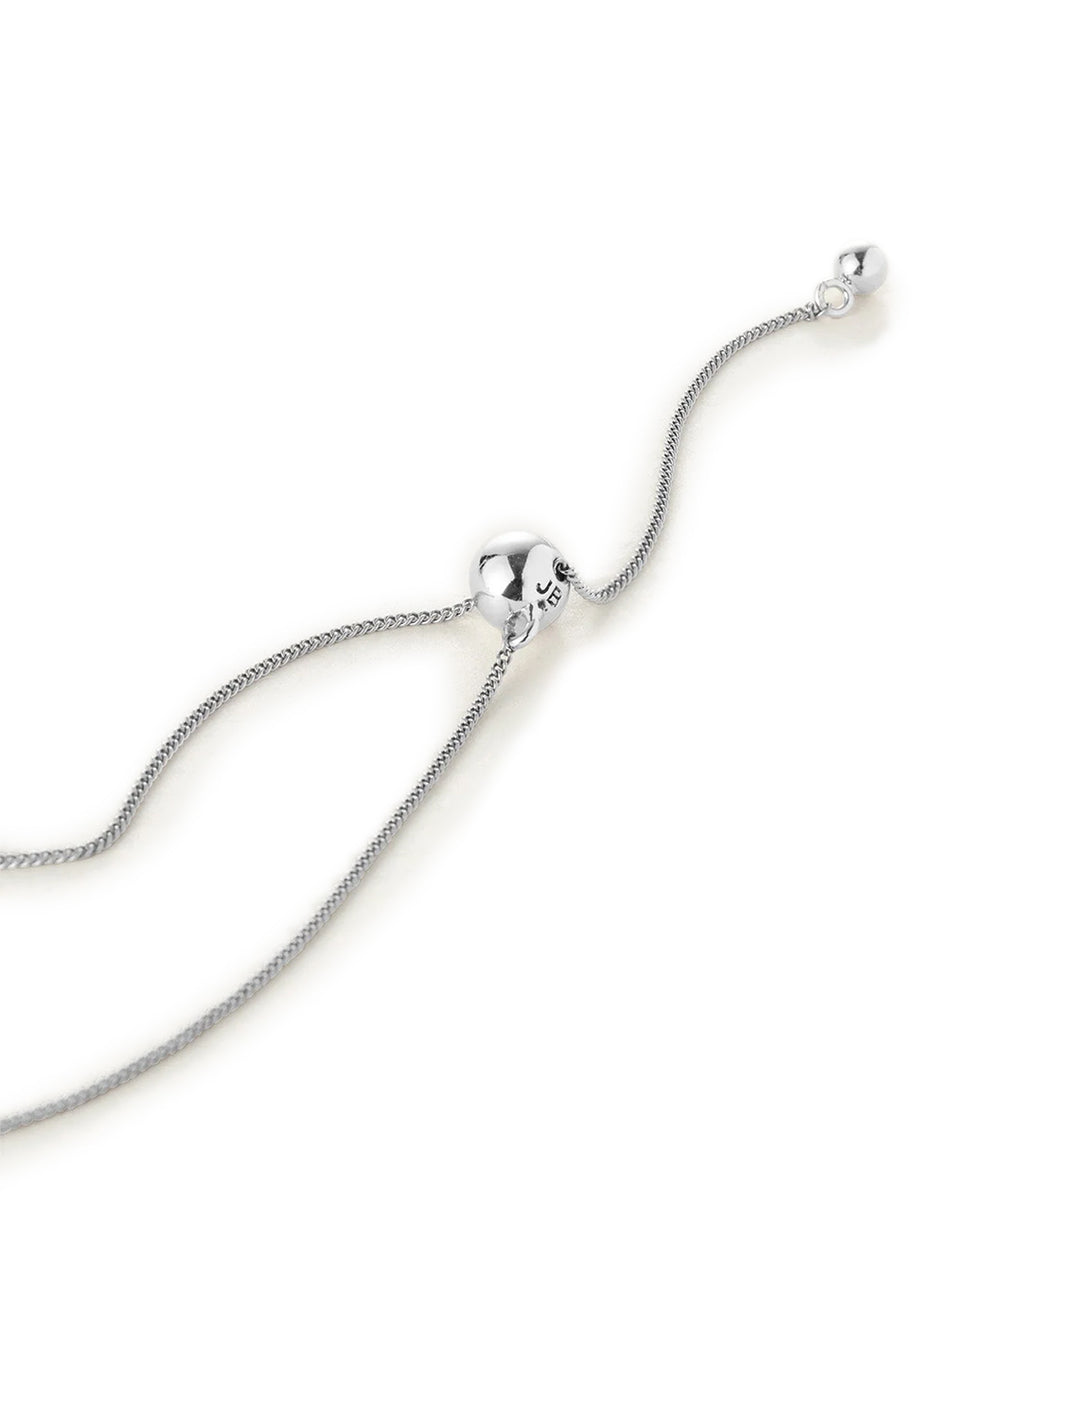 aurora pendant necklace in silver (2)